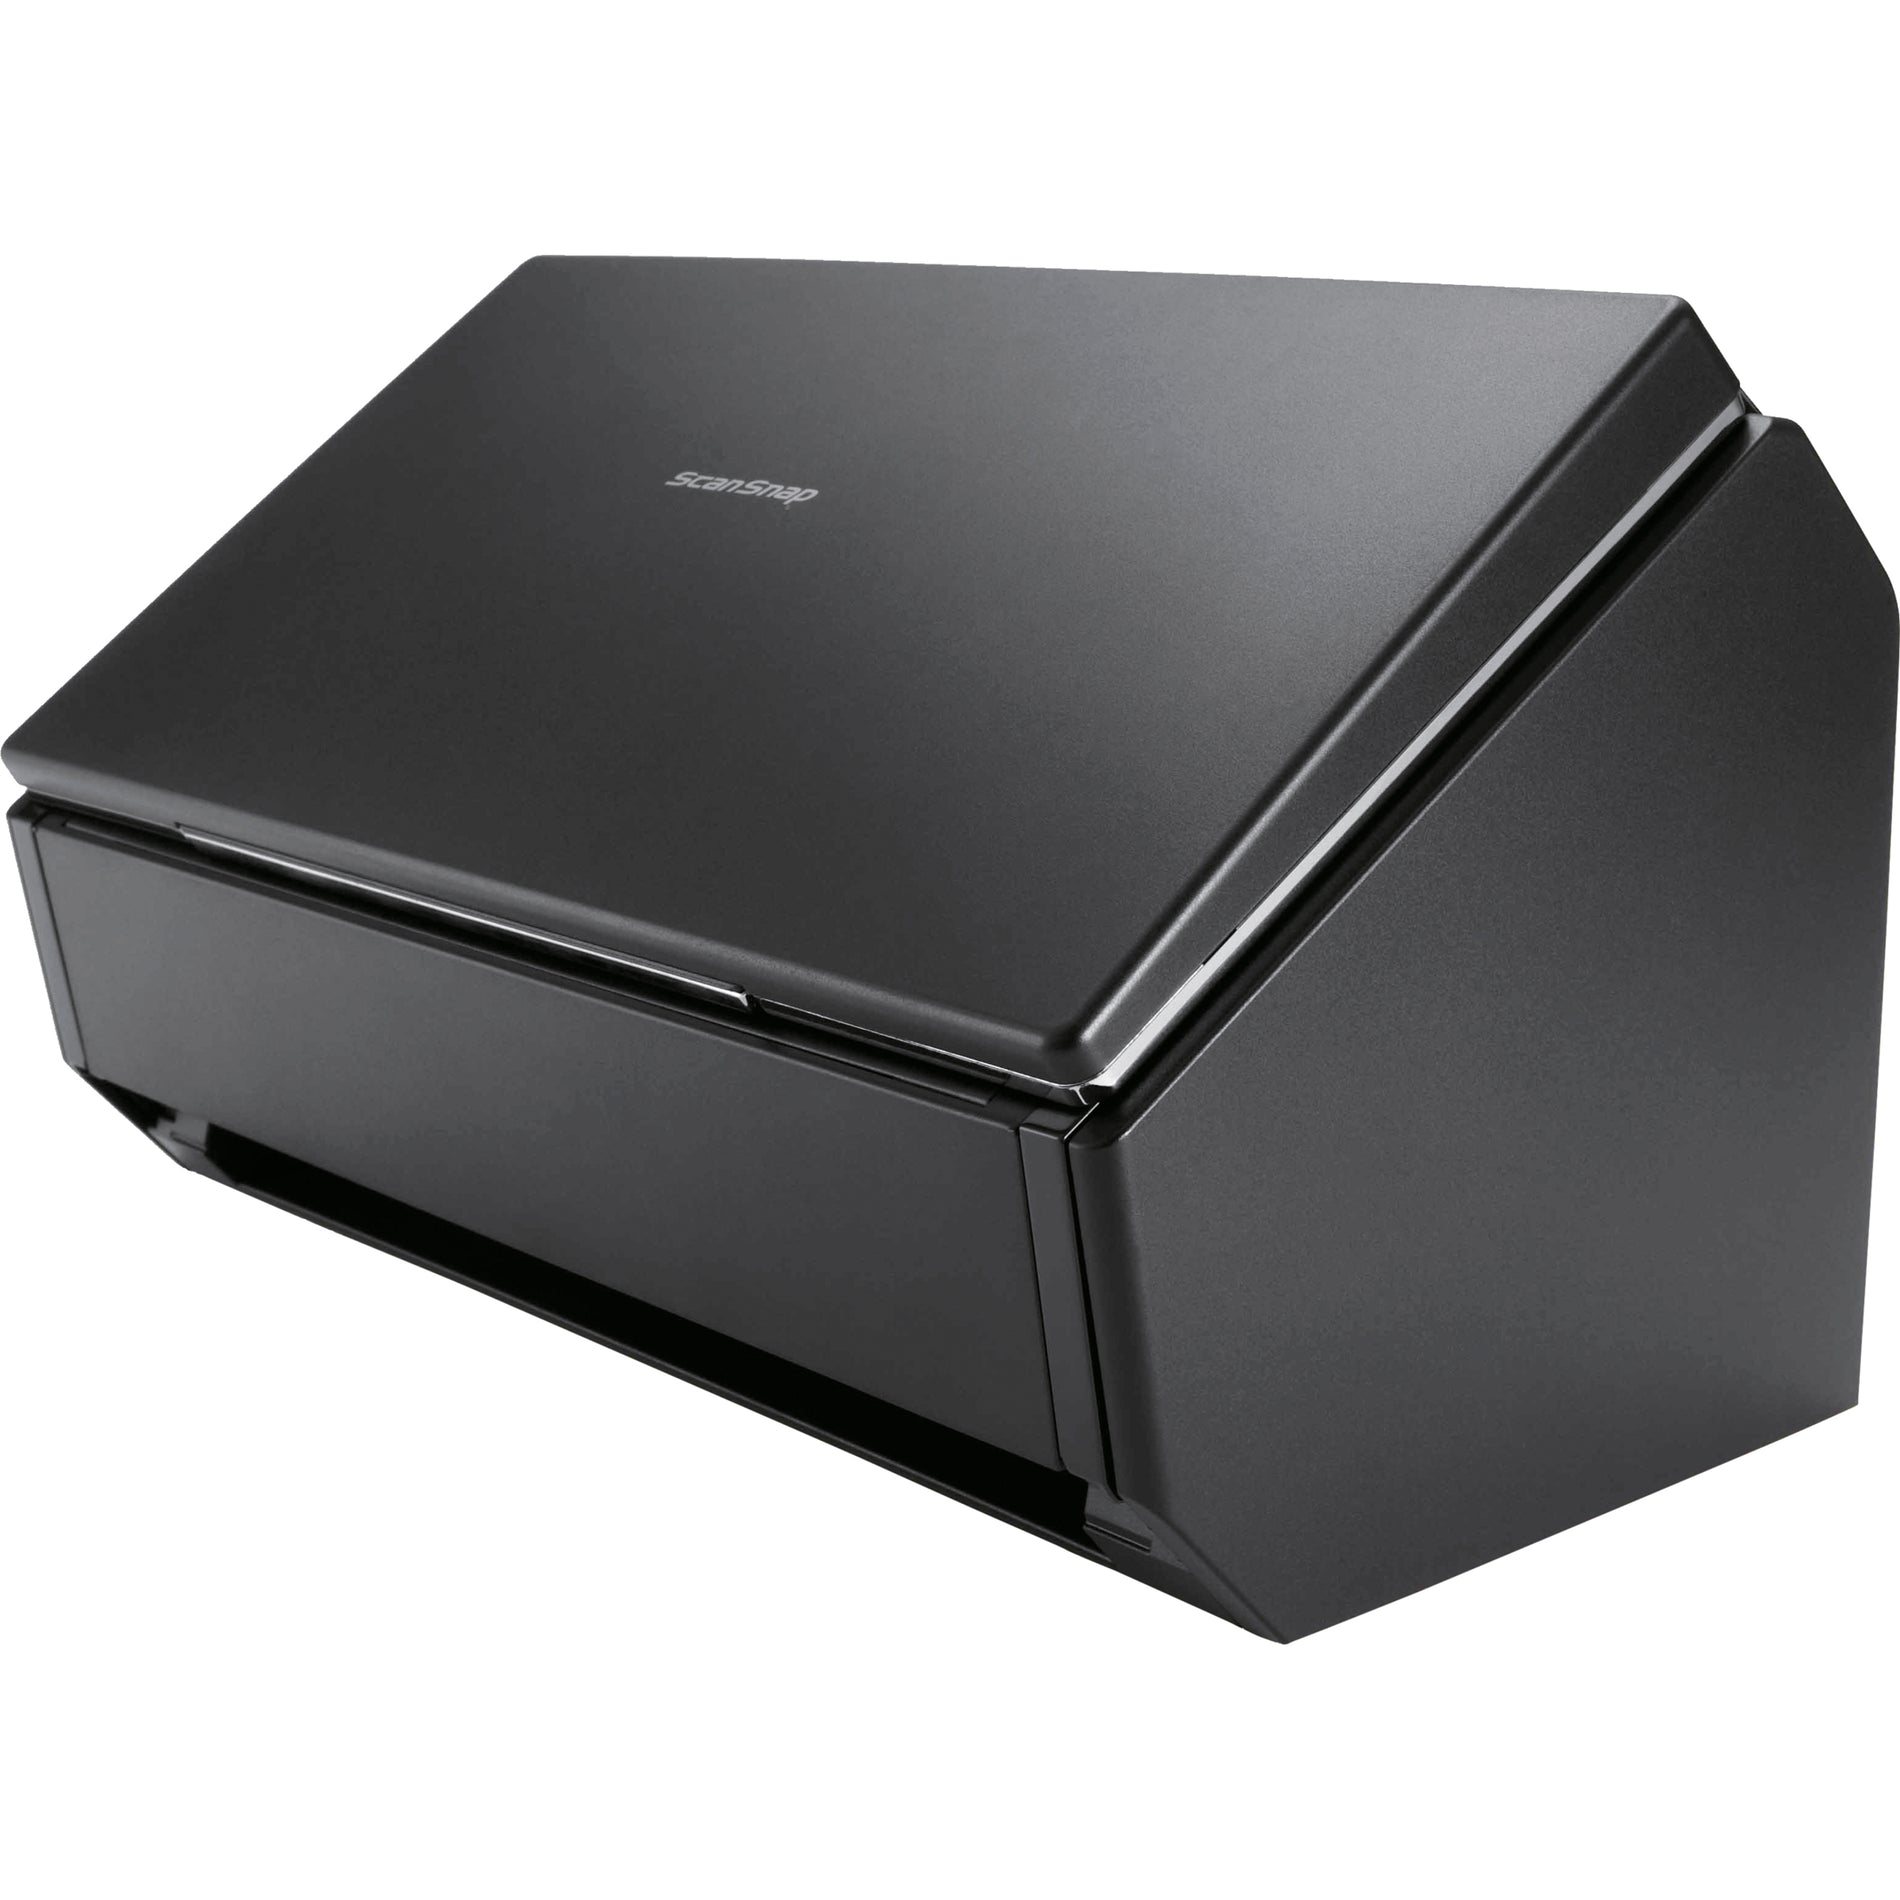 Fujitsu PA03656-B305 ScanSnap iX500 Color Duplex Desk Scanner, PC and Mac Compatible, 50 Sheet ADF Capacity